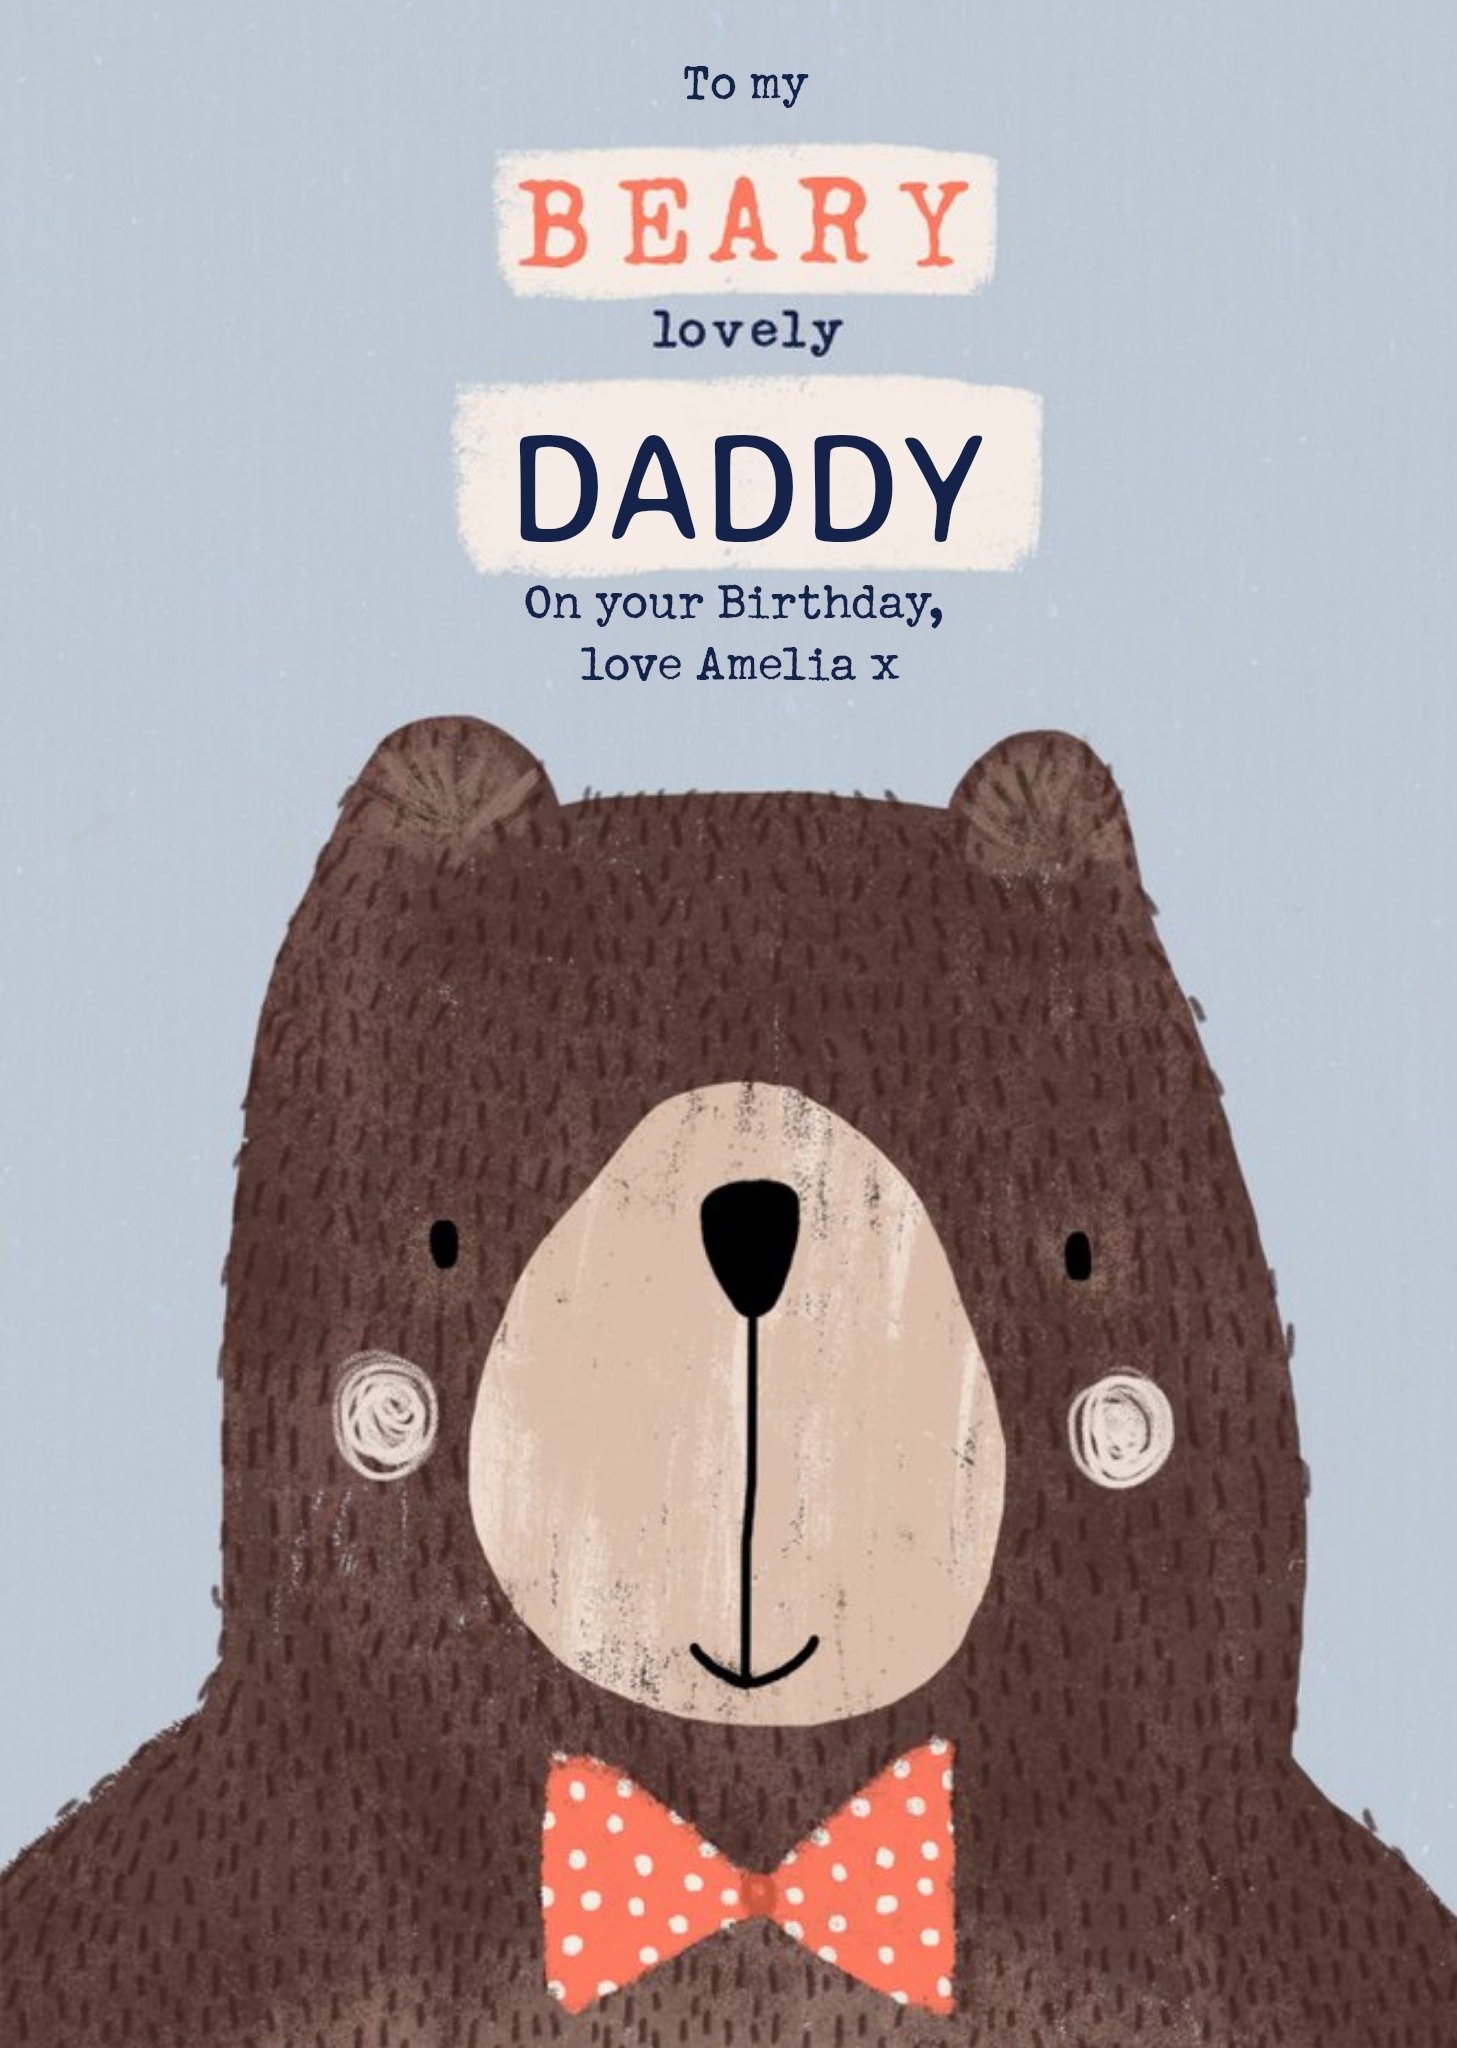 Moonpig Beary Lovely Daddy - Birthday Card - Bear, Large